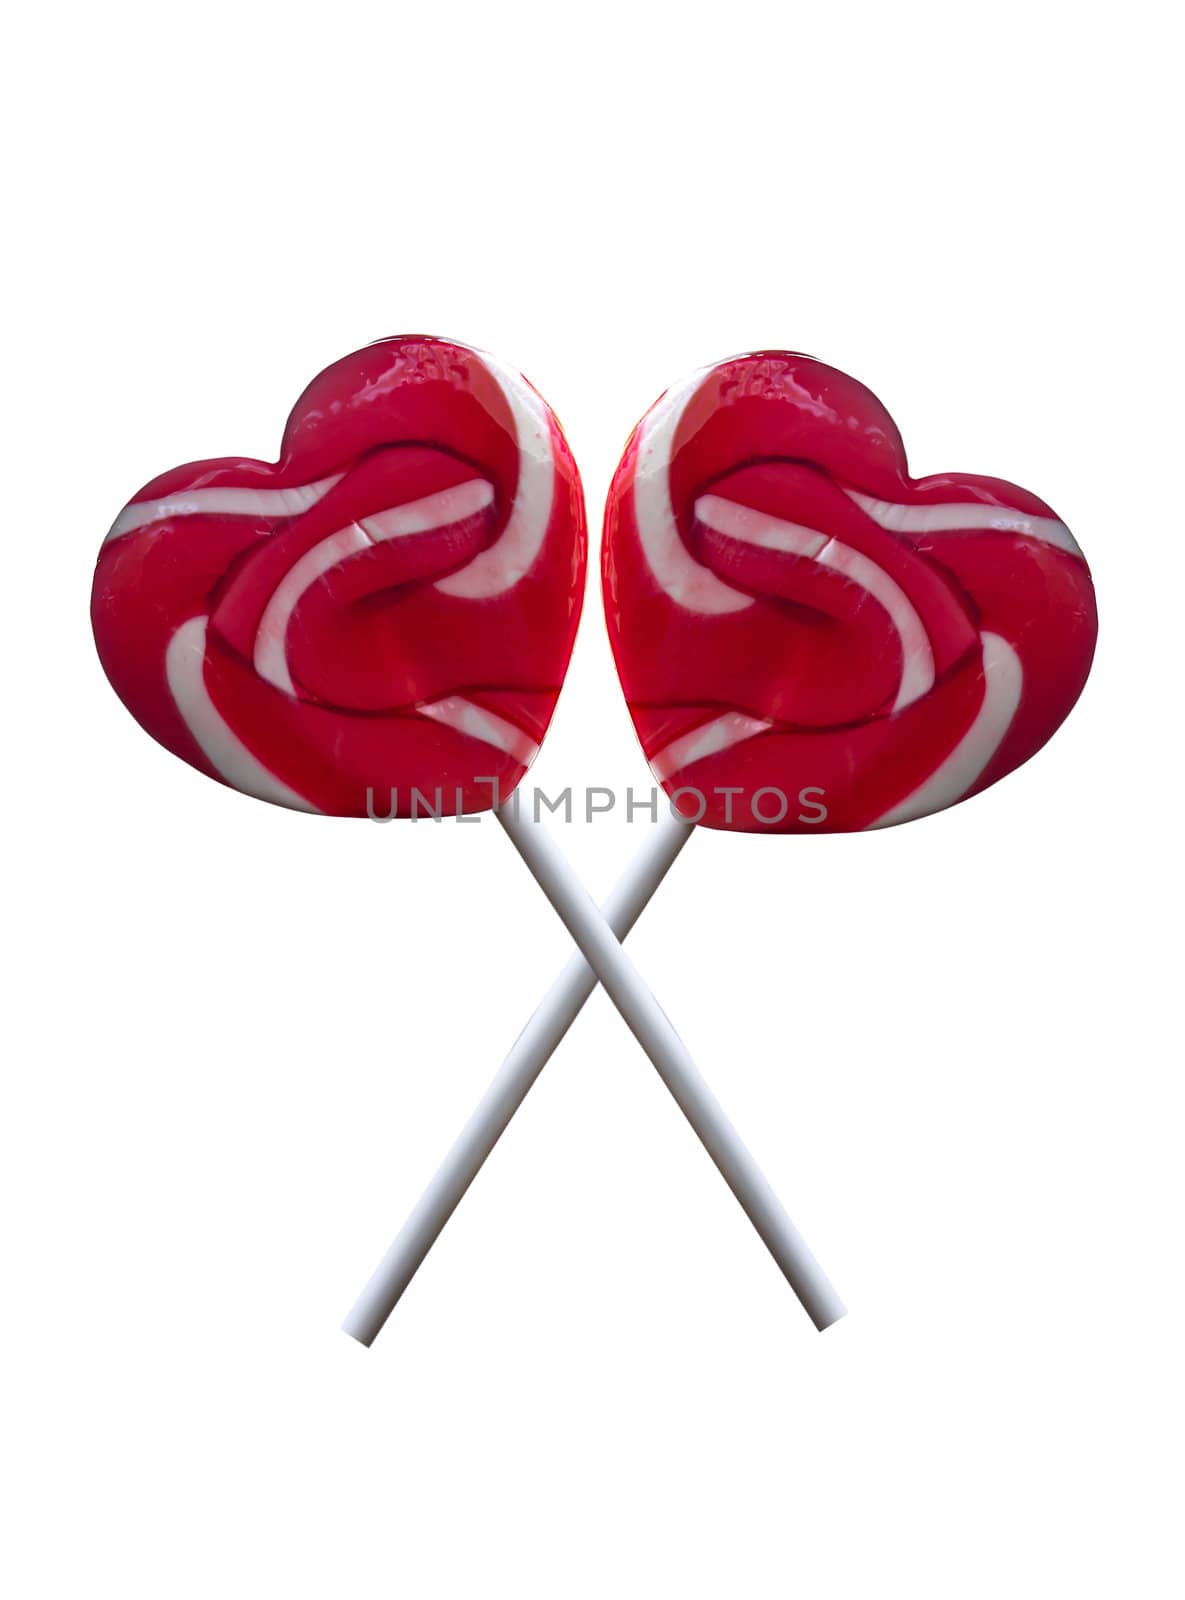 Candy heart on a stick  by stoonn